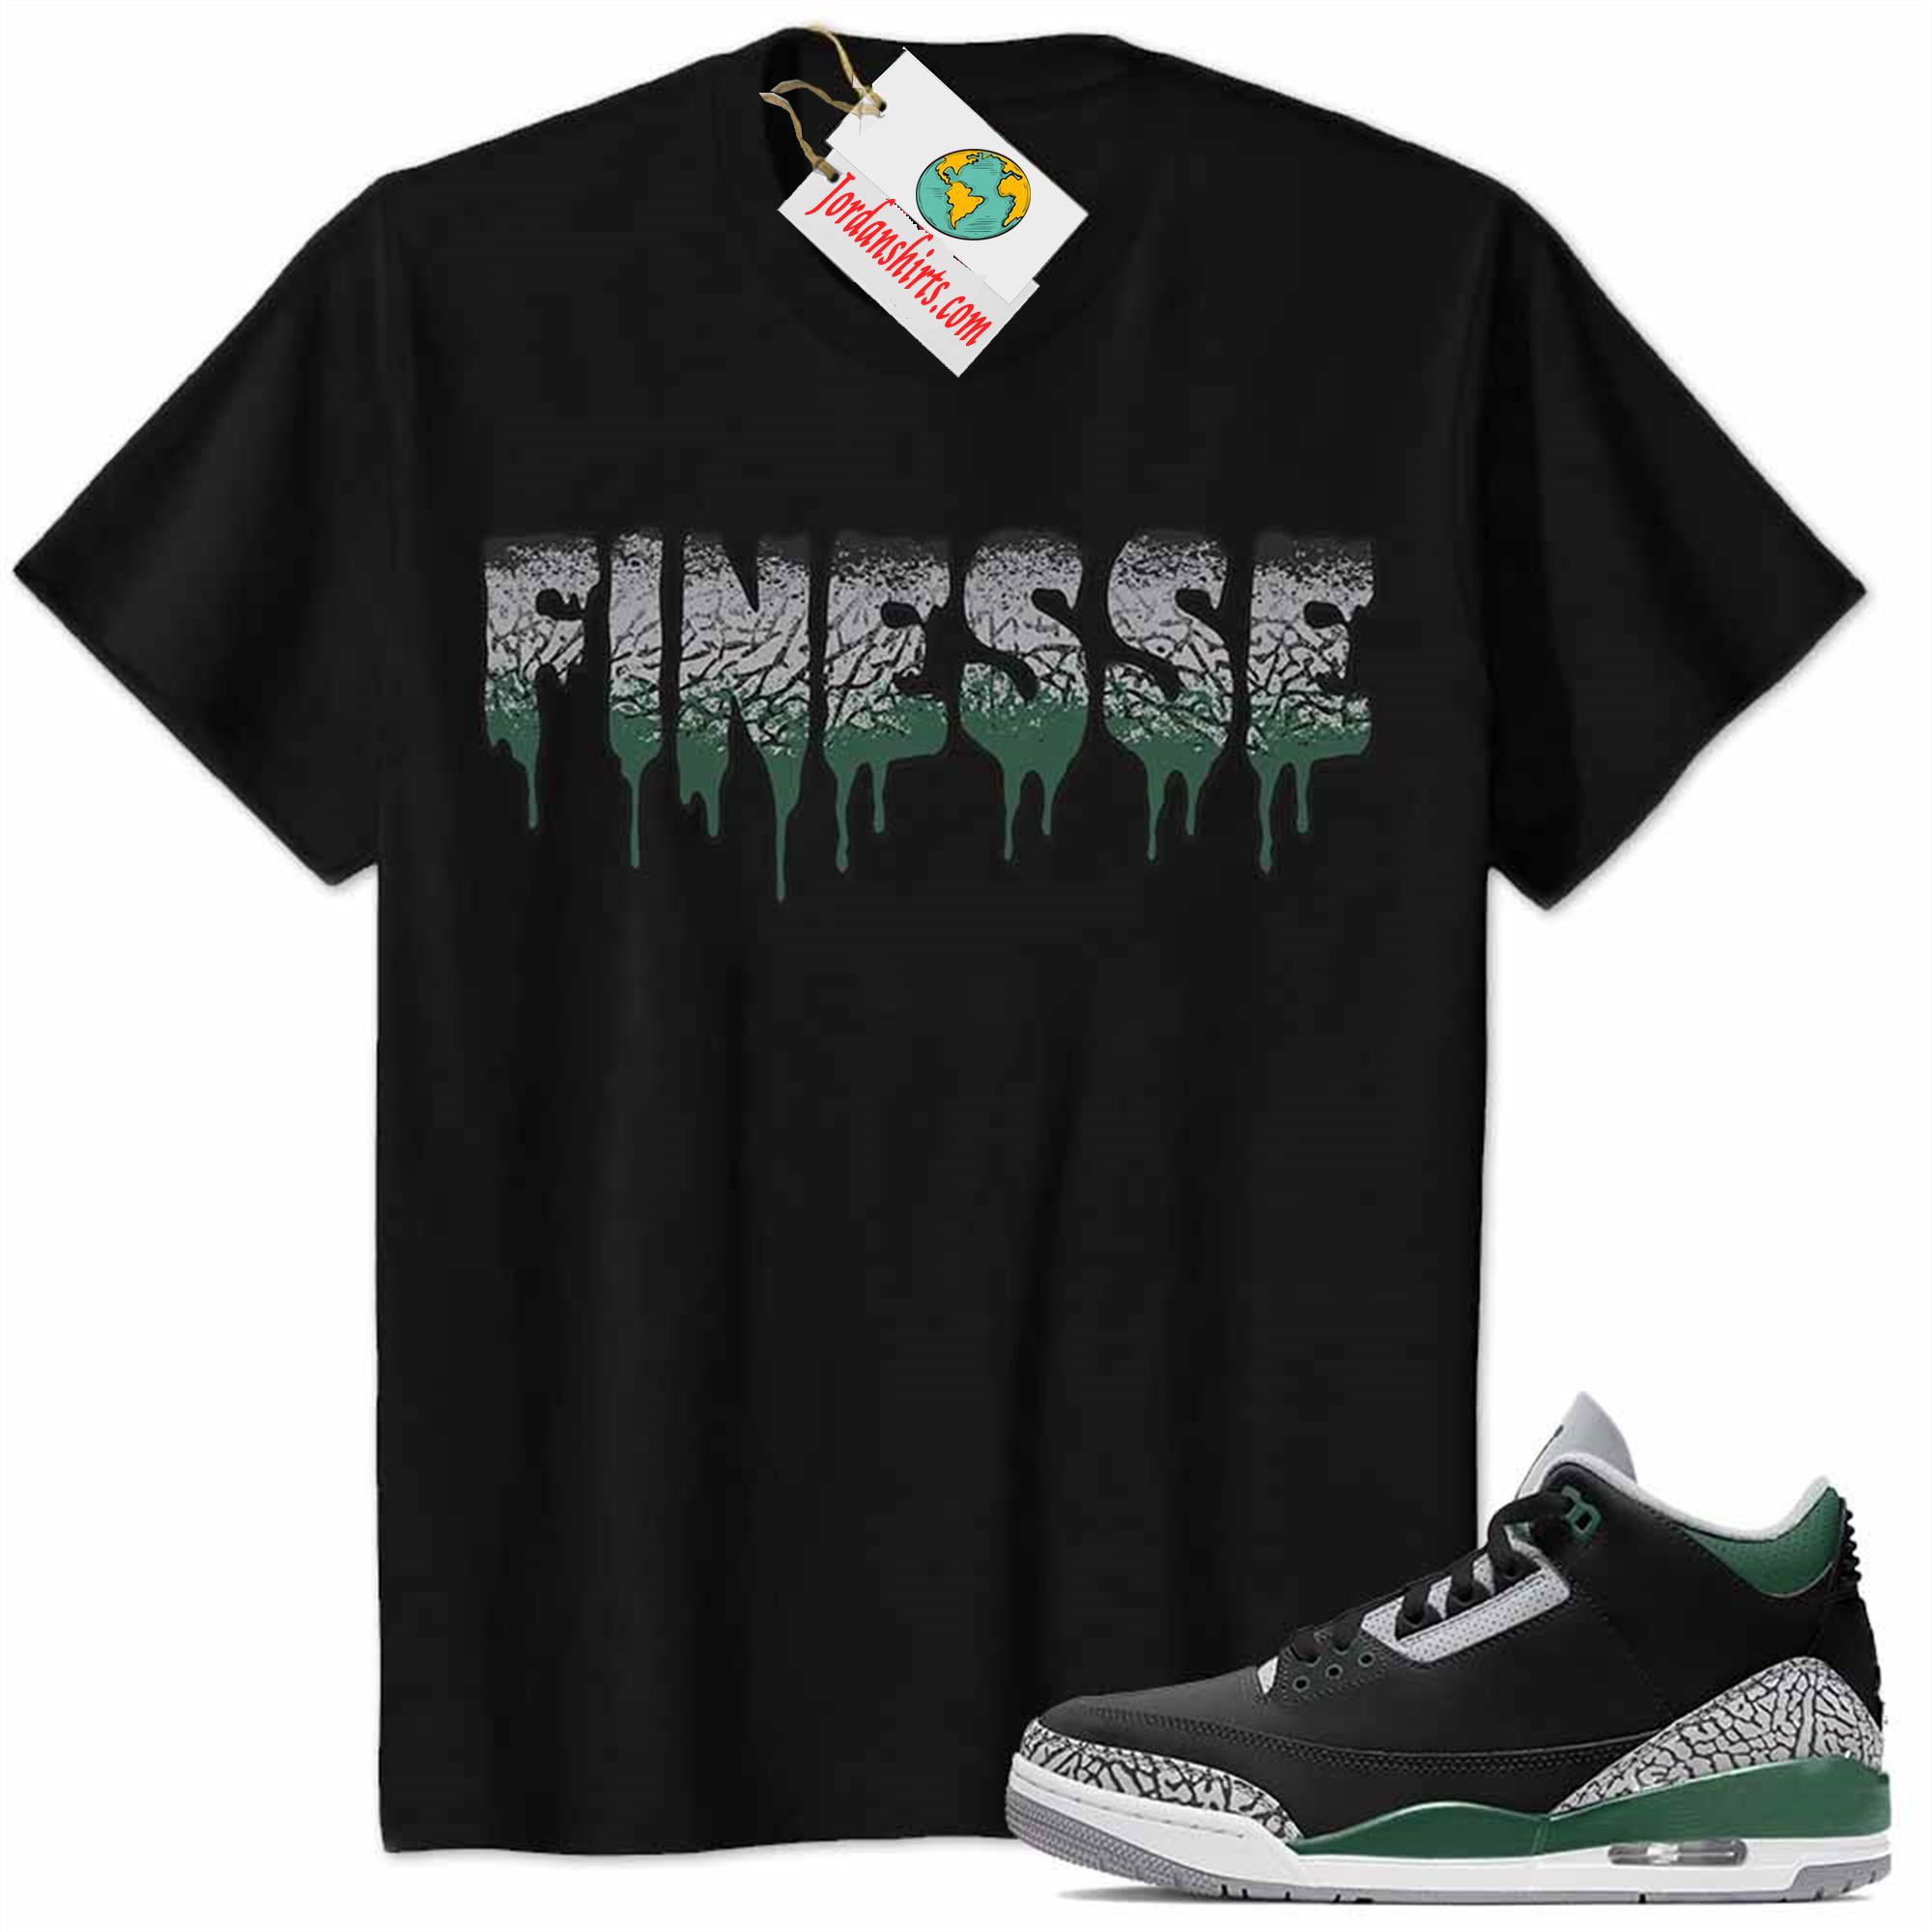 Jordan 3 Shirt, Jordan 3 Pine Green Shirt Finesse Drip Black Full Size Up To 5xl